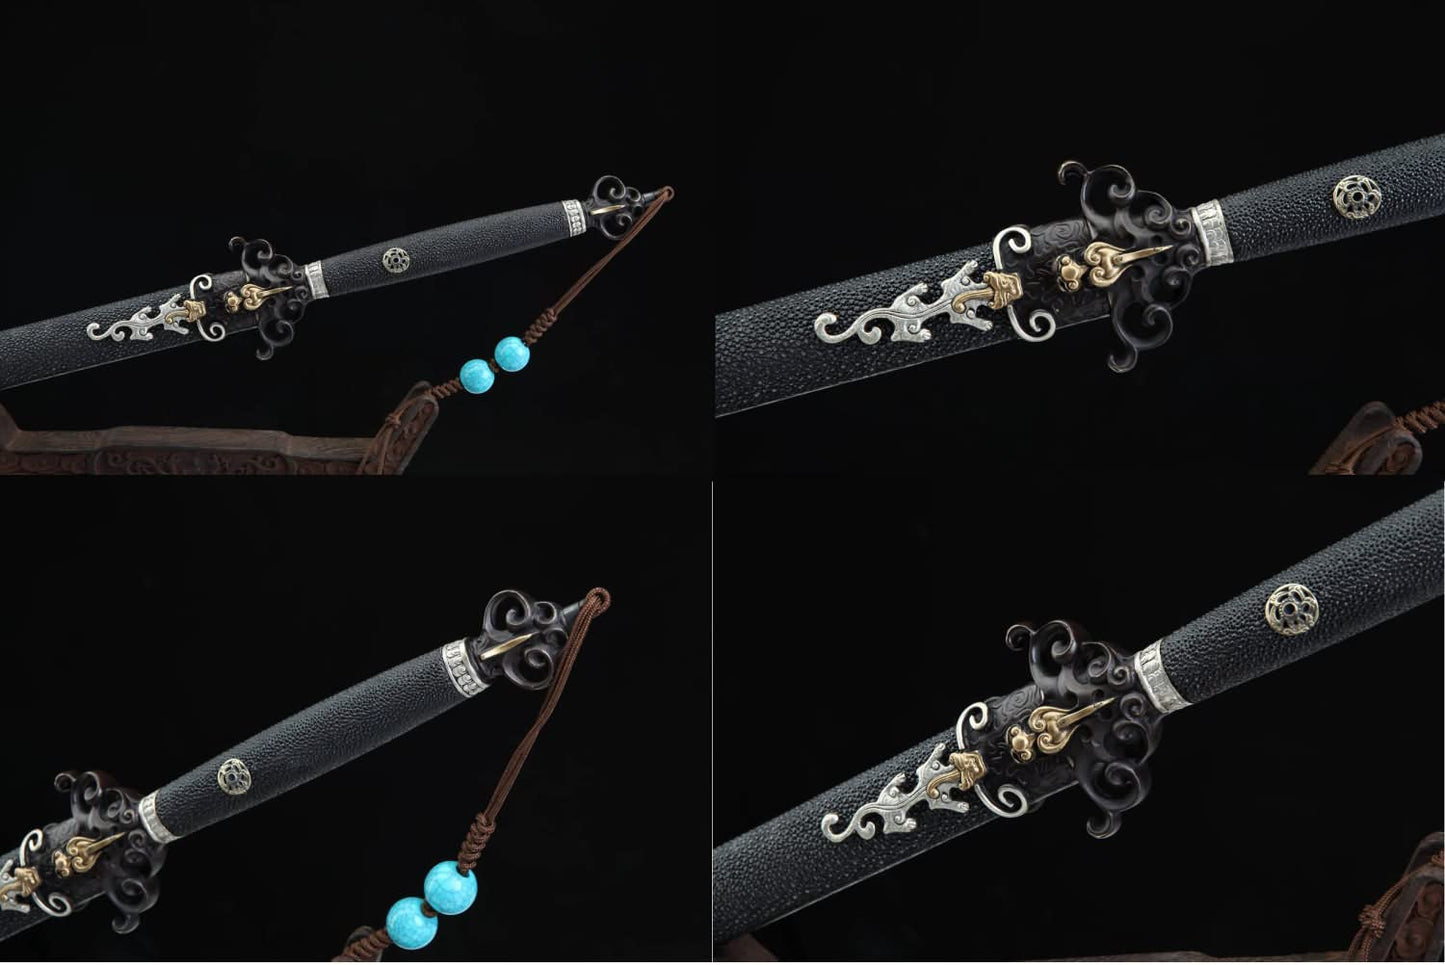 Fire Dragon Sword,Forged Damascus Steel Blade,Skin Scabbard,Brass Fittings